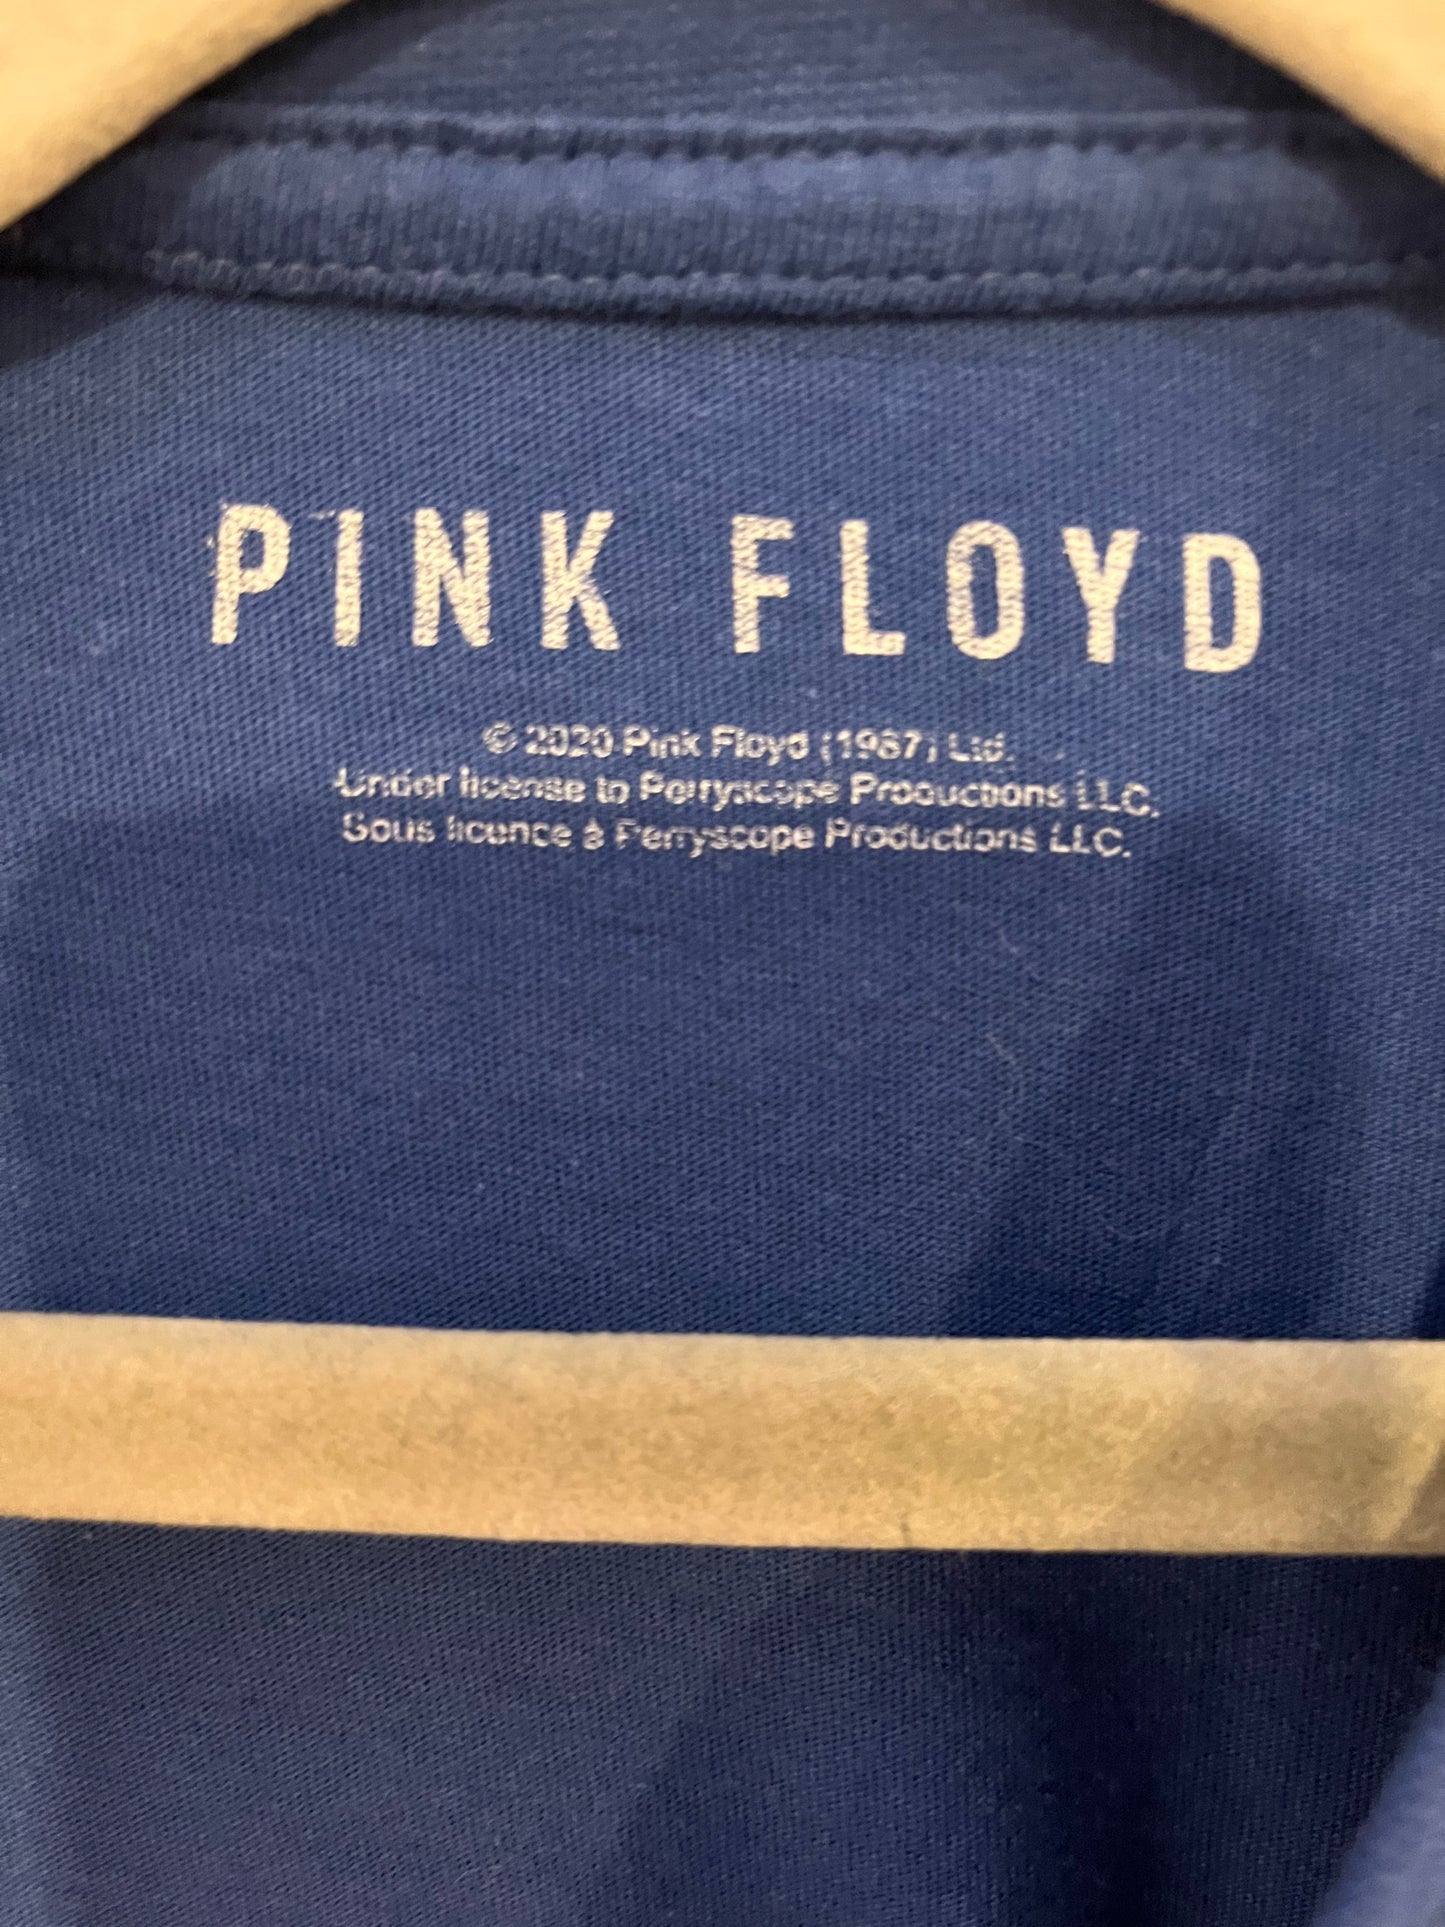 Pink Floyd "Dark Side" Band T-Shirt (7-8)